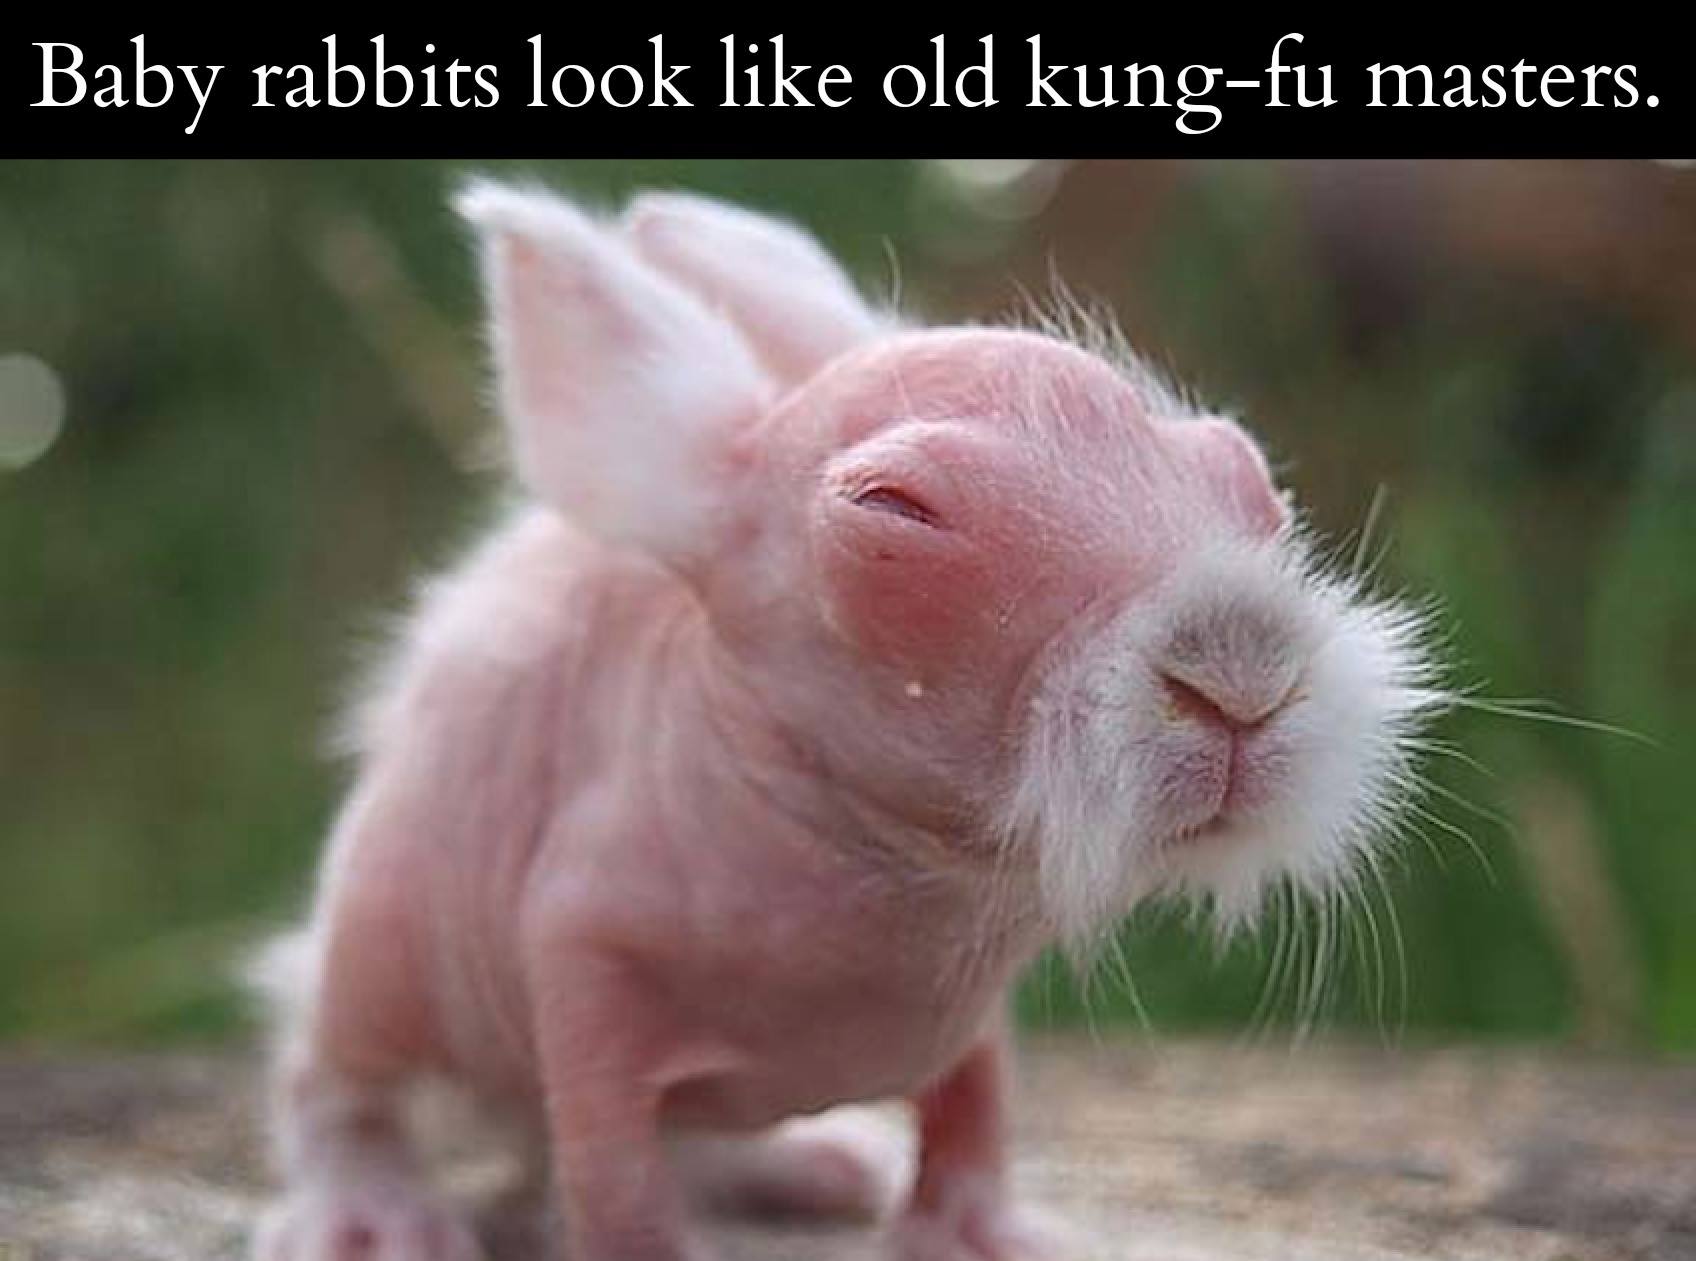 baby rabbit hairless - Baby rabbits look old kungfu masters.